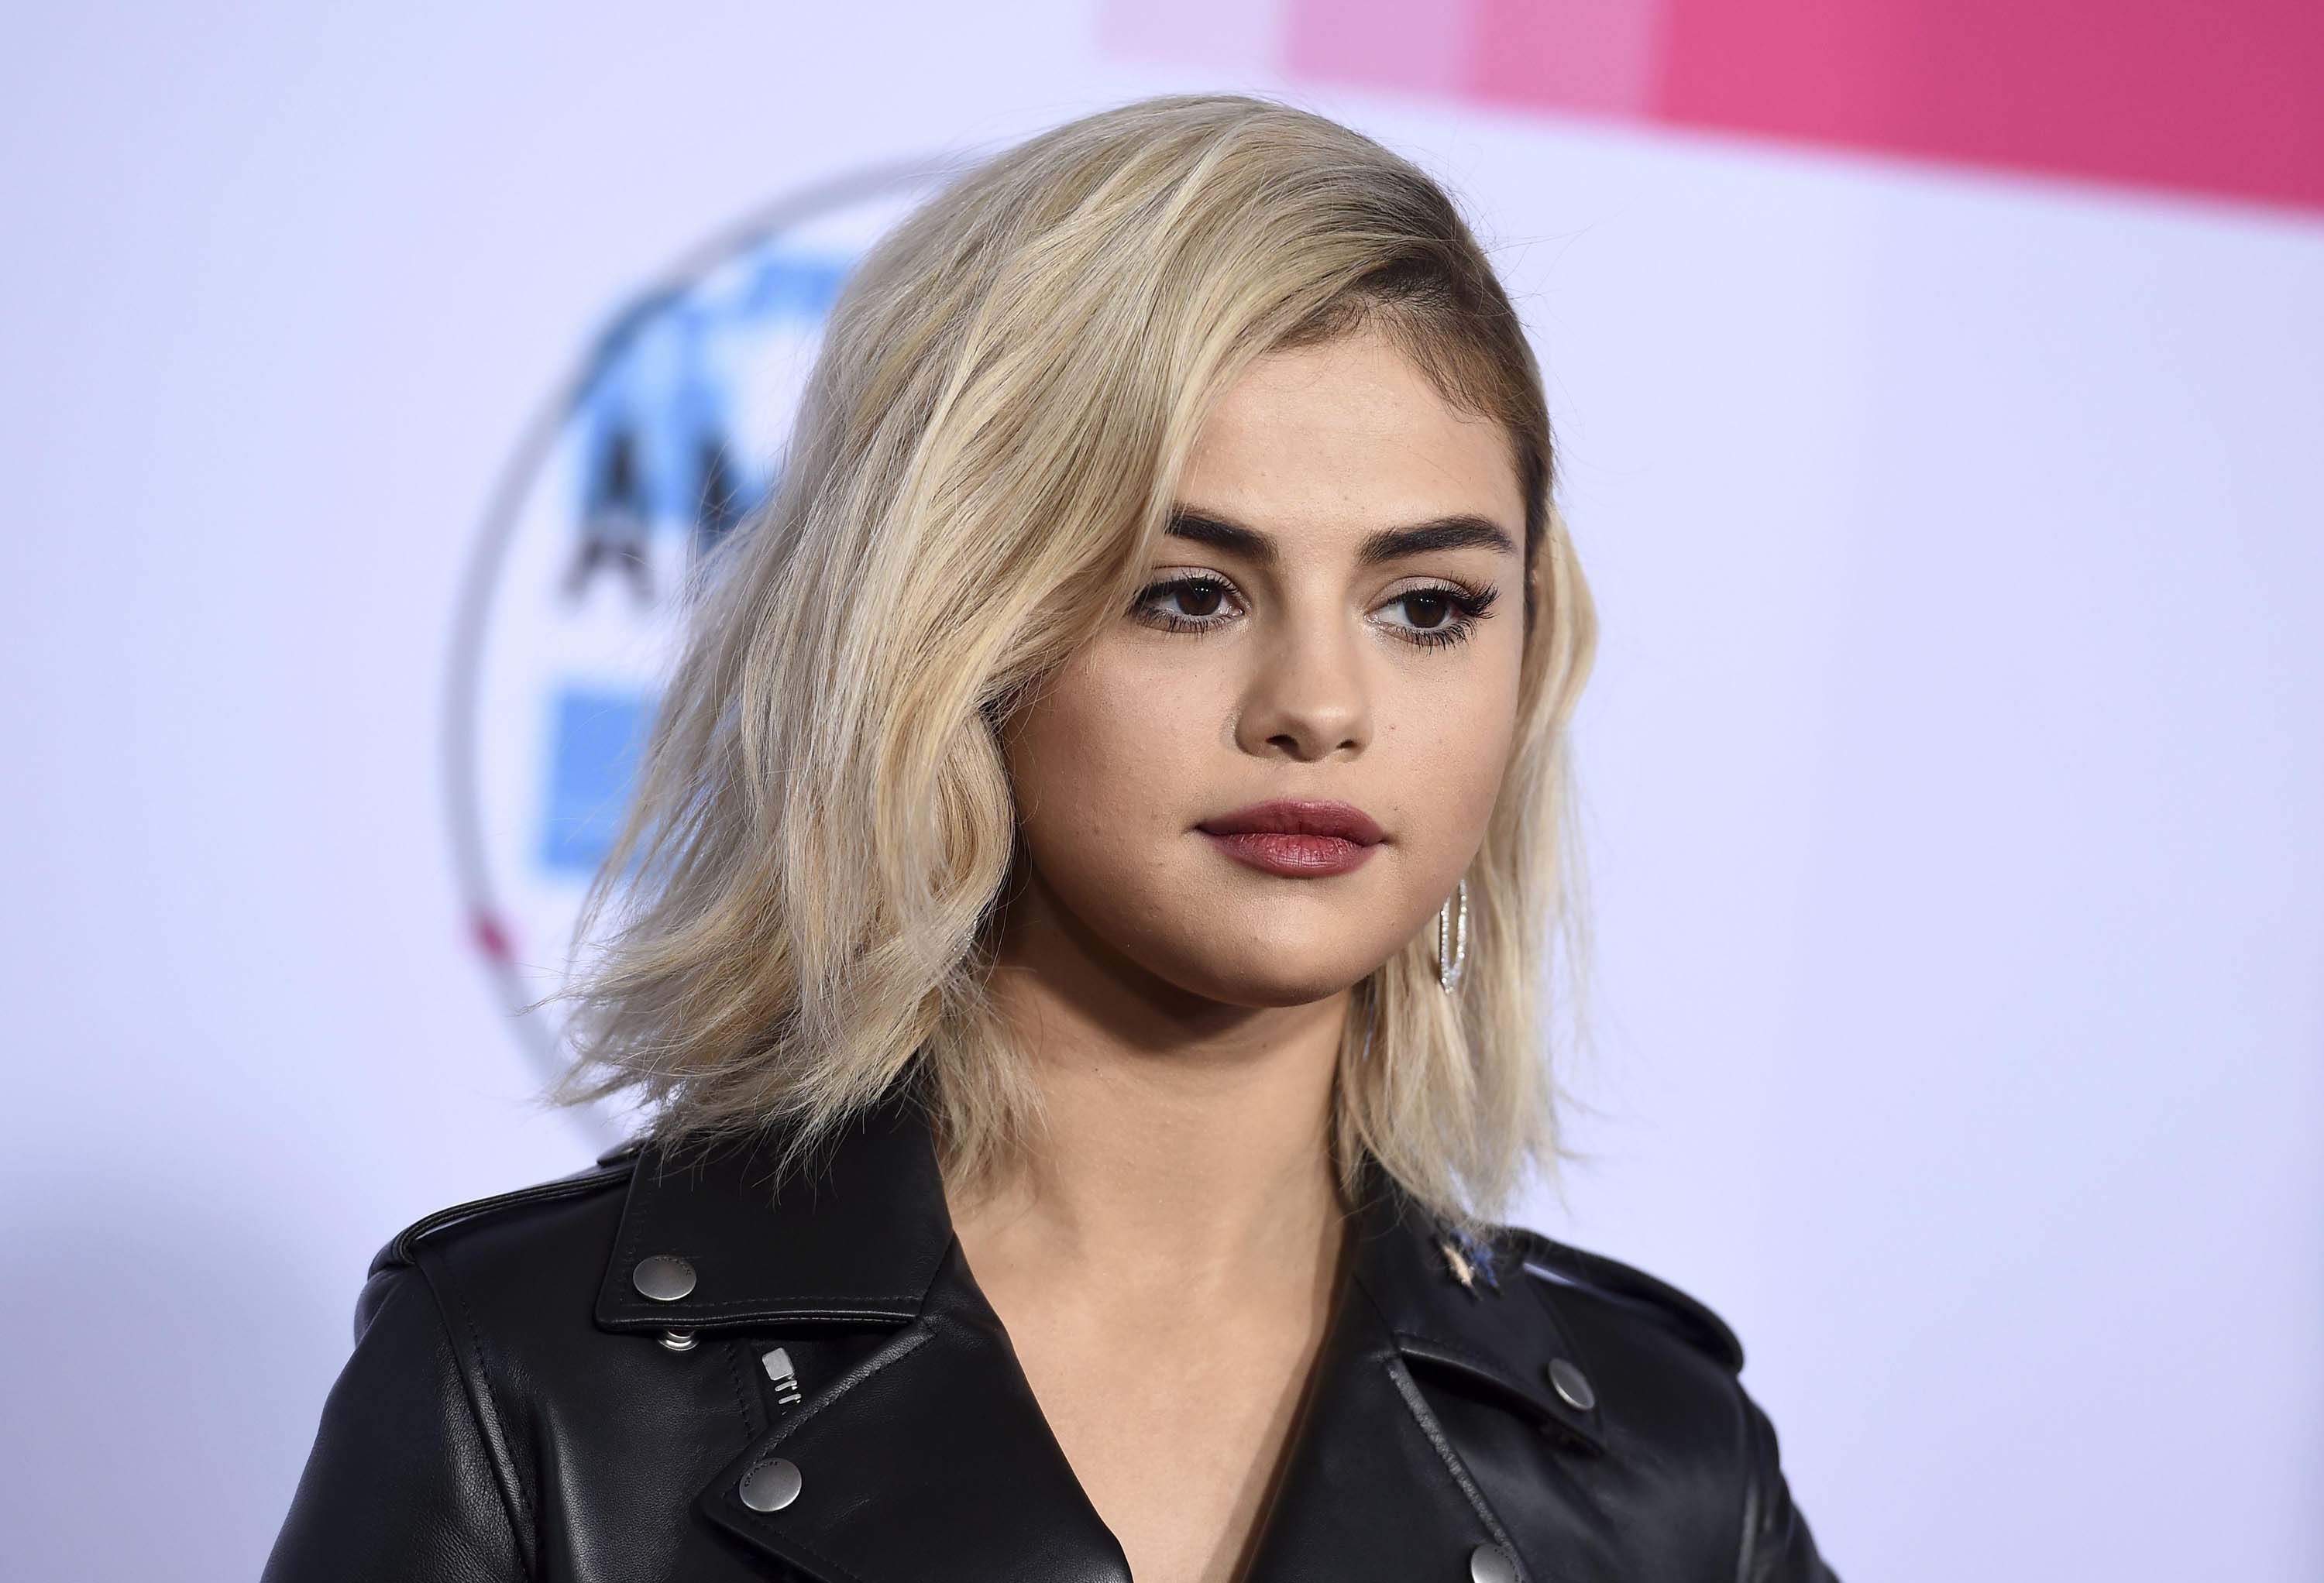 Selena Gomez attends 2017 American Music Awards